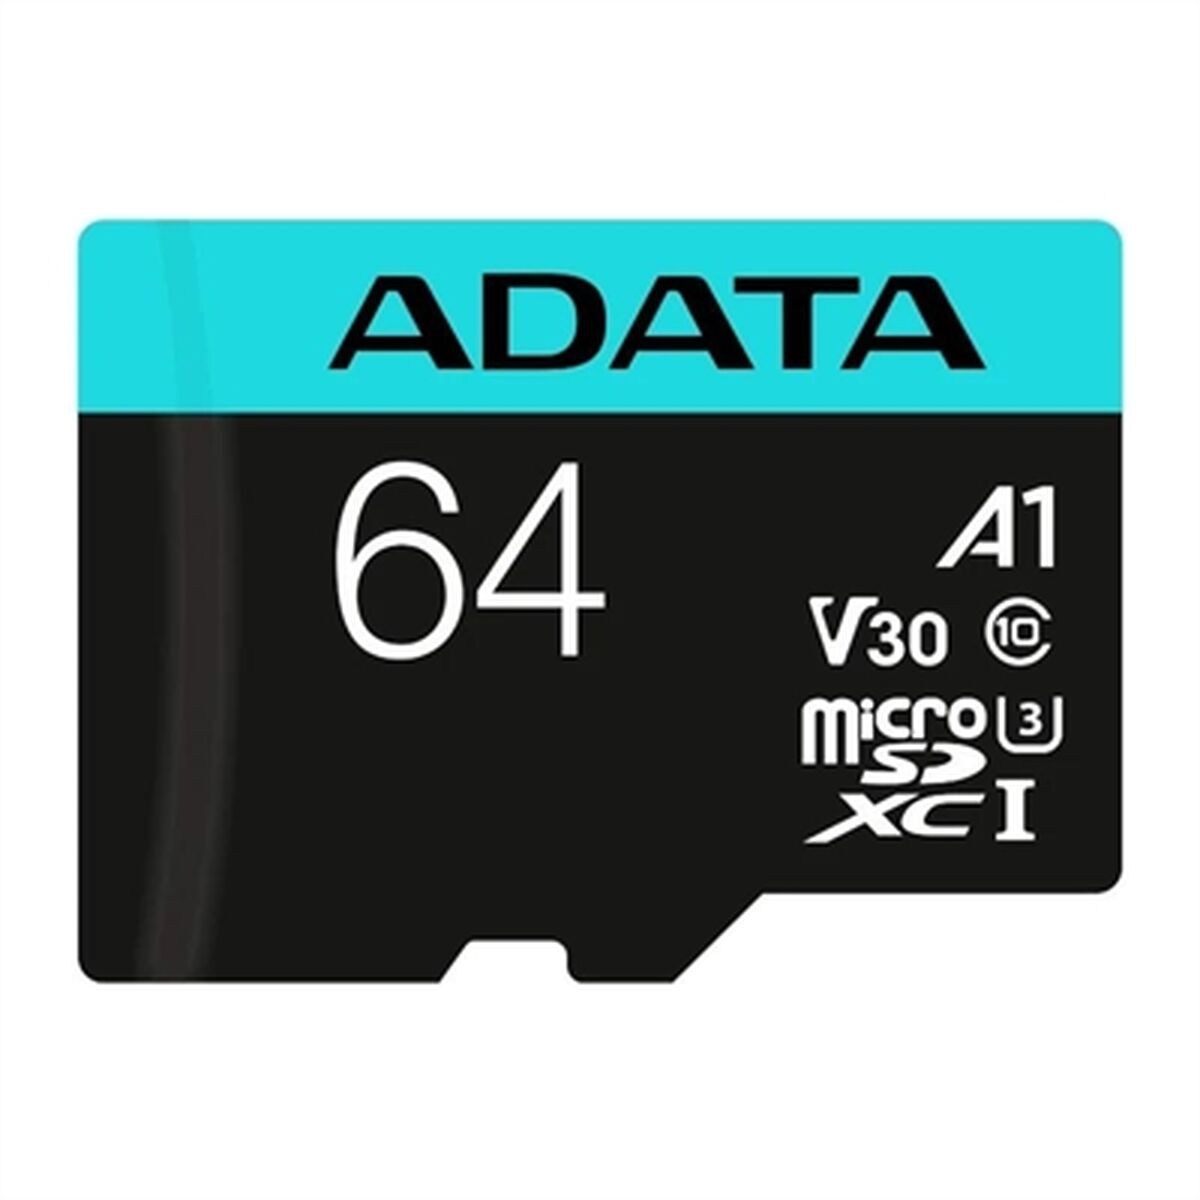 Micro SD Card Adata AUSDX64GUI3V30SA2 64 GB, Adata, Computing, Data storage, micro-sd-card-adata-ausdx64gui3v30sa2-64-gb, Brand_Adata, category-reference-2609, category-reference-2803, category-reference-2813, category-reference-t-19685, category-reference-t-19909, category-reference-t-21355, category-reference-t-25632, category-reference-t-29820, computers / components, Condition_NEW, Price_20 - 50, Teleworking, RiotNook